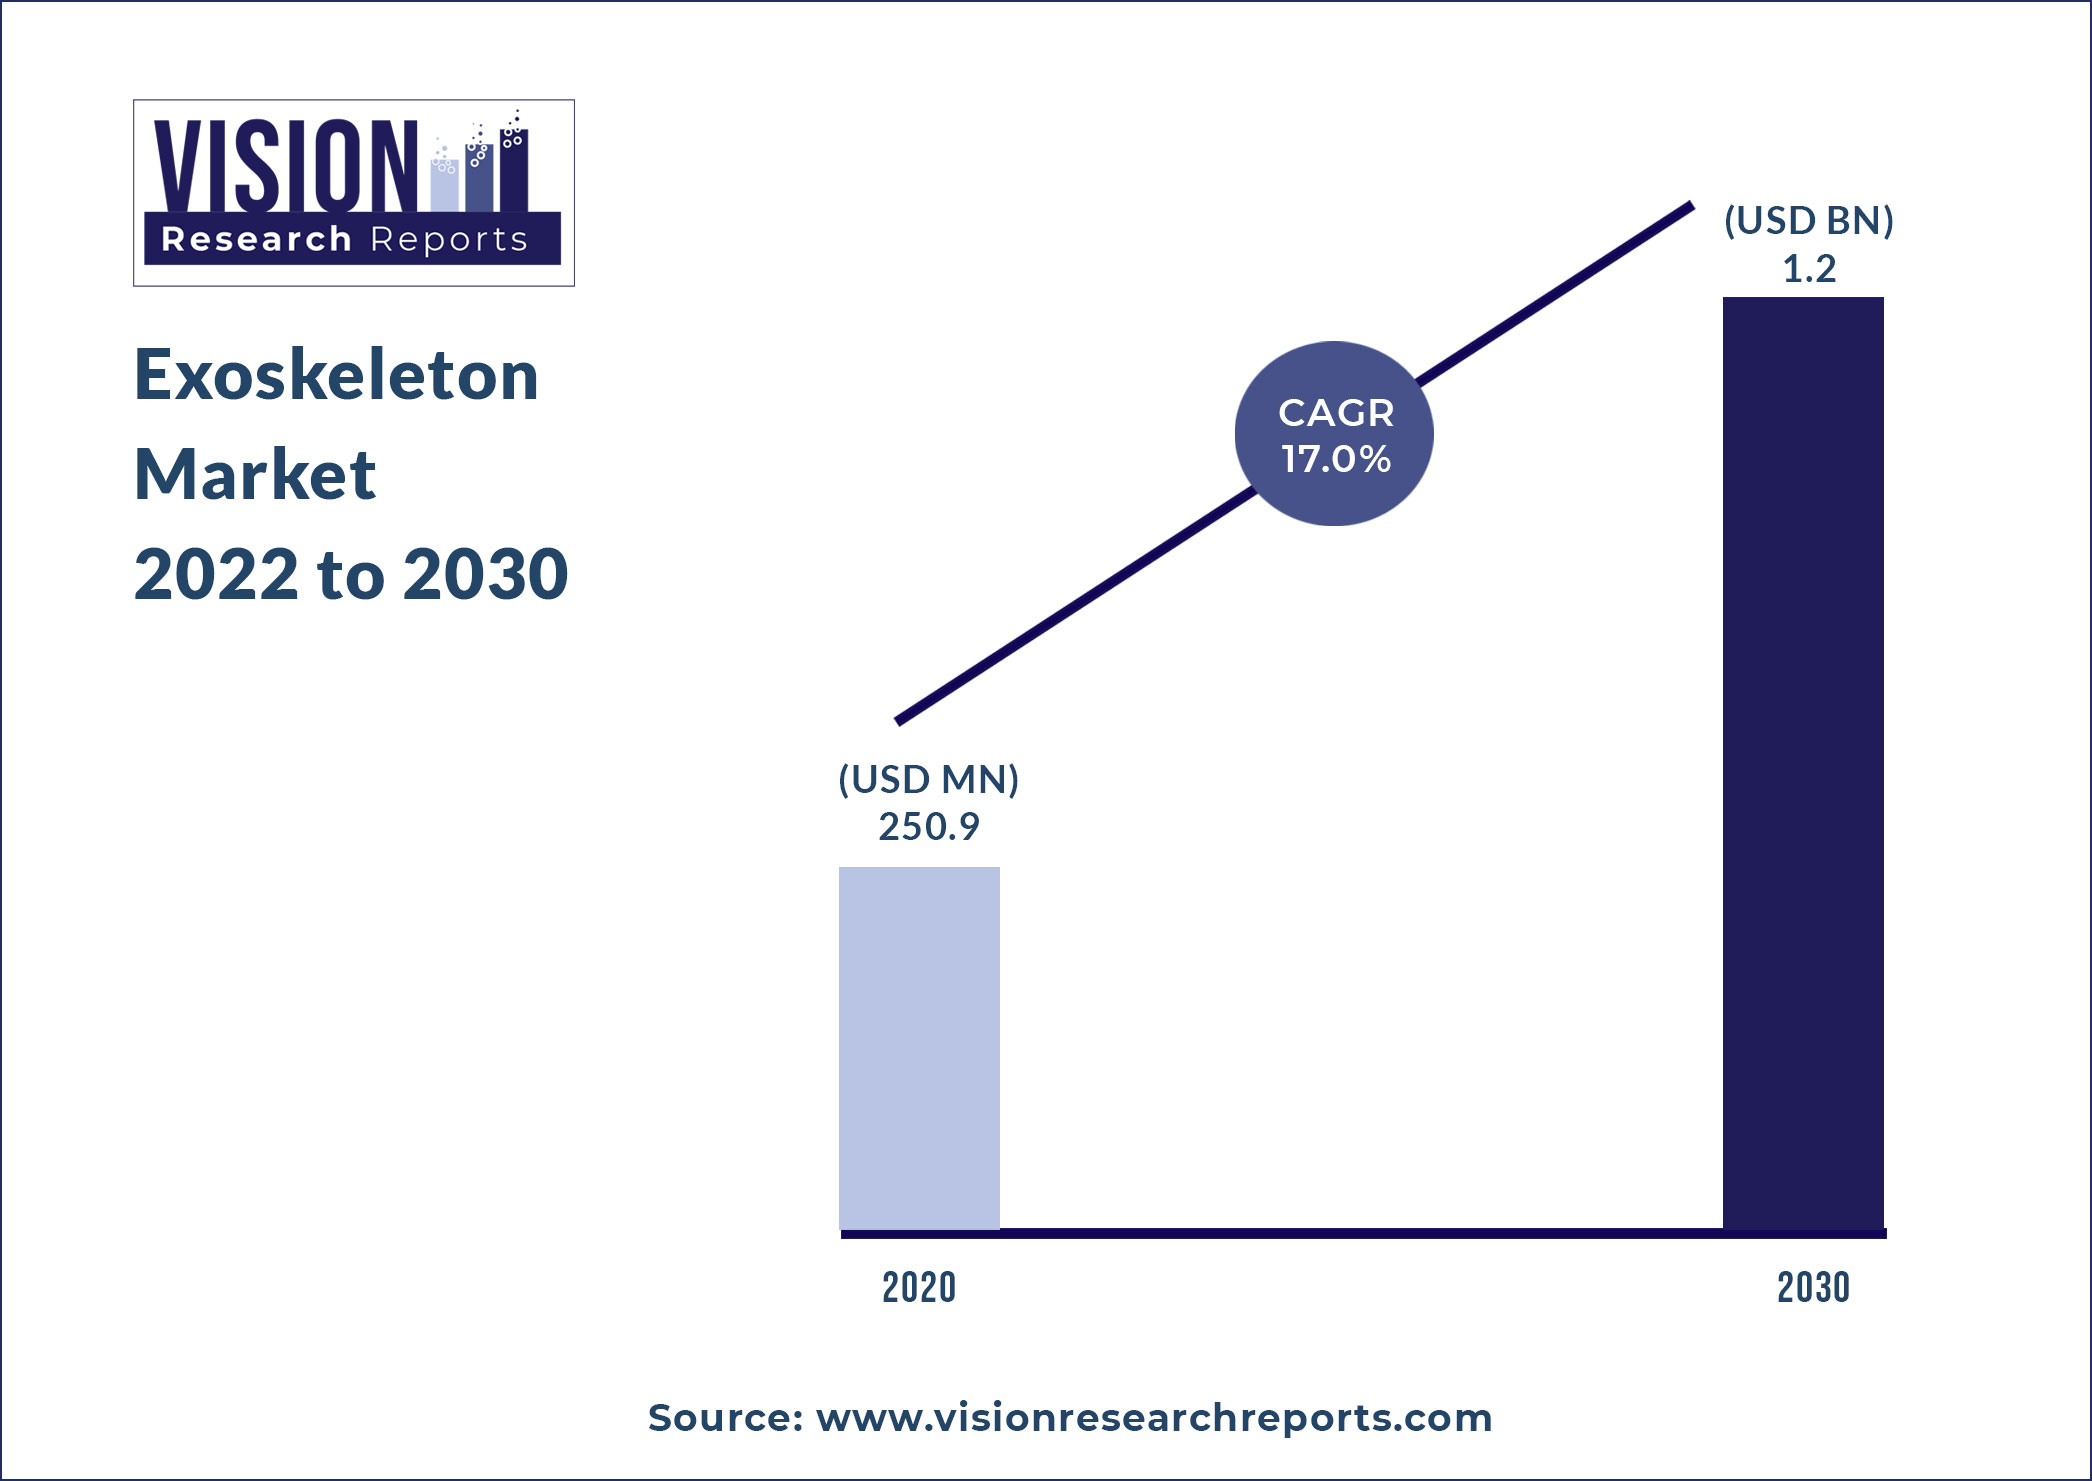 Exoskeleton Market Size 2022 to 2030